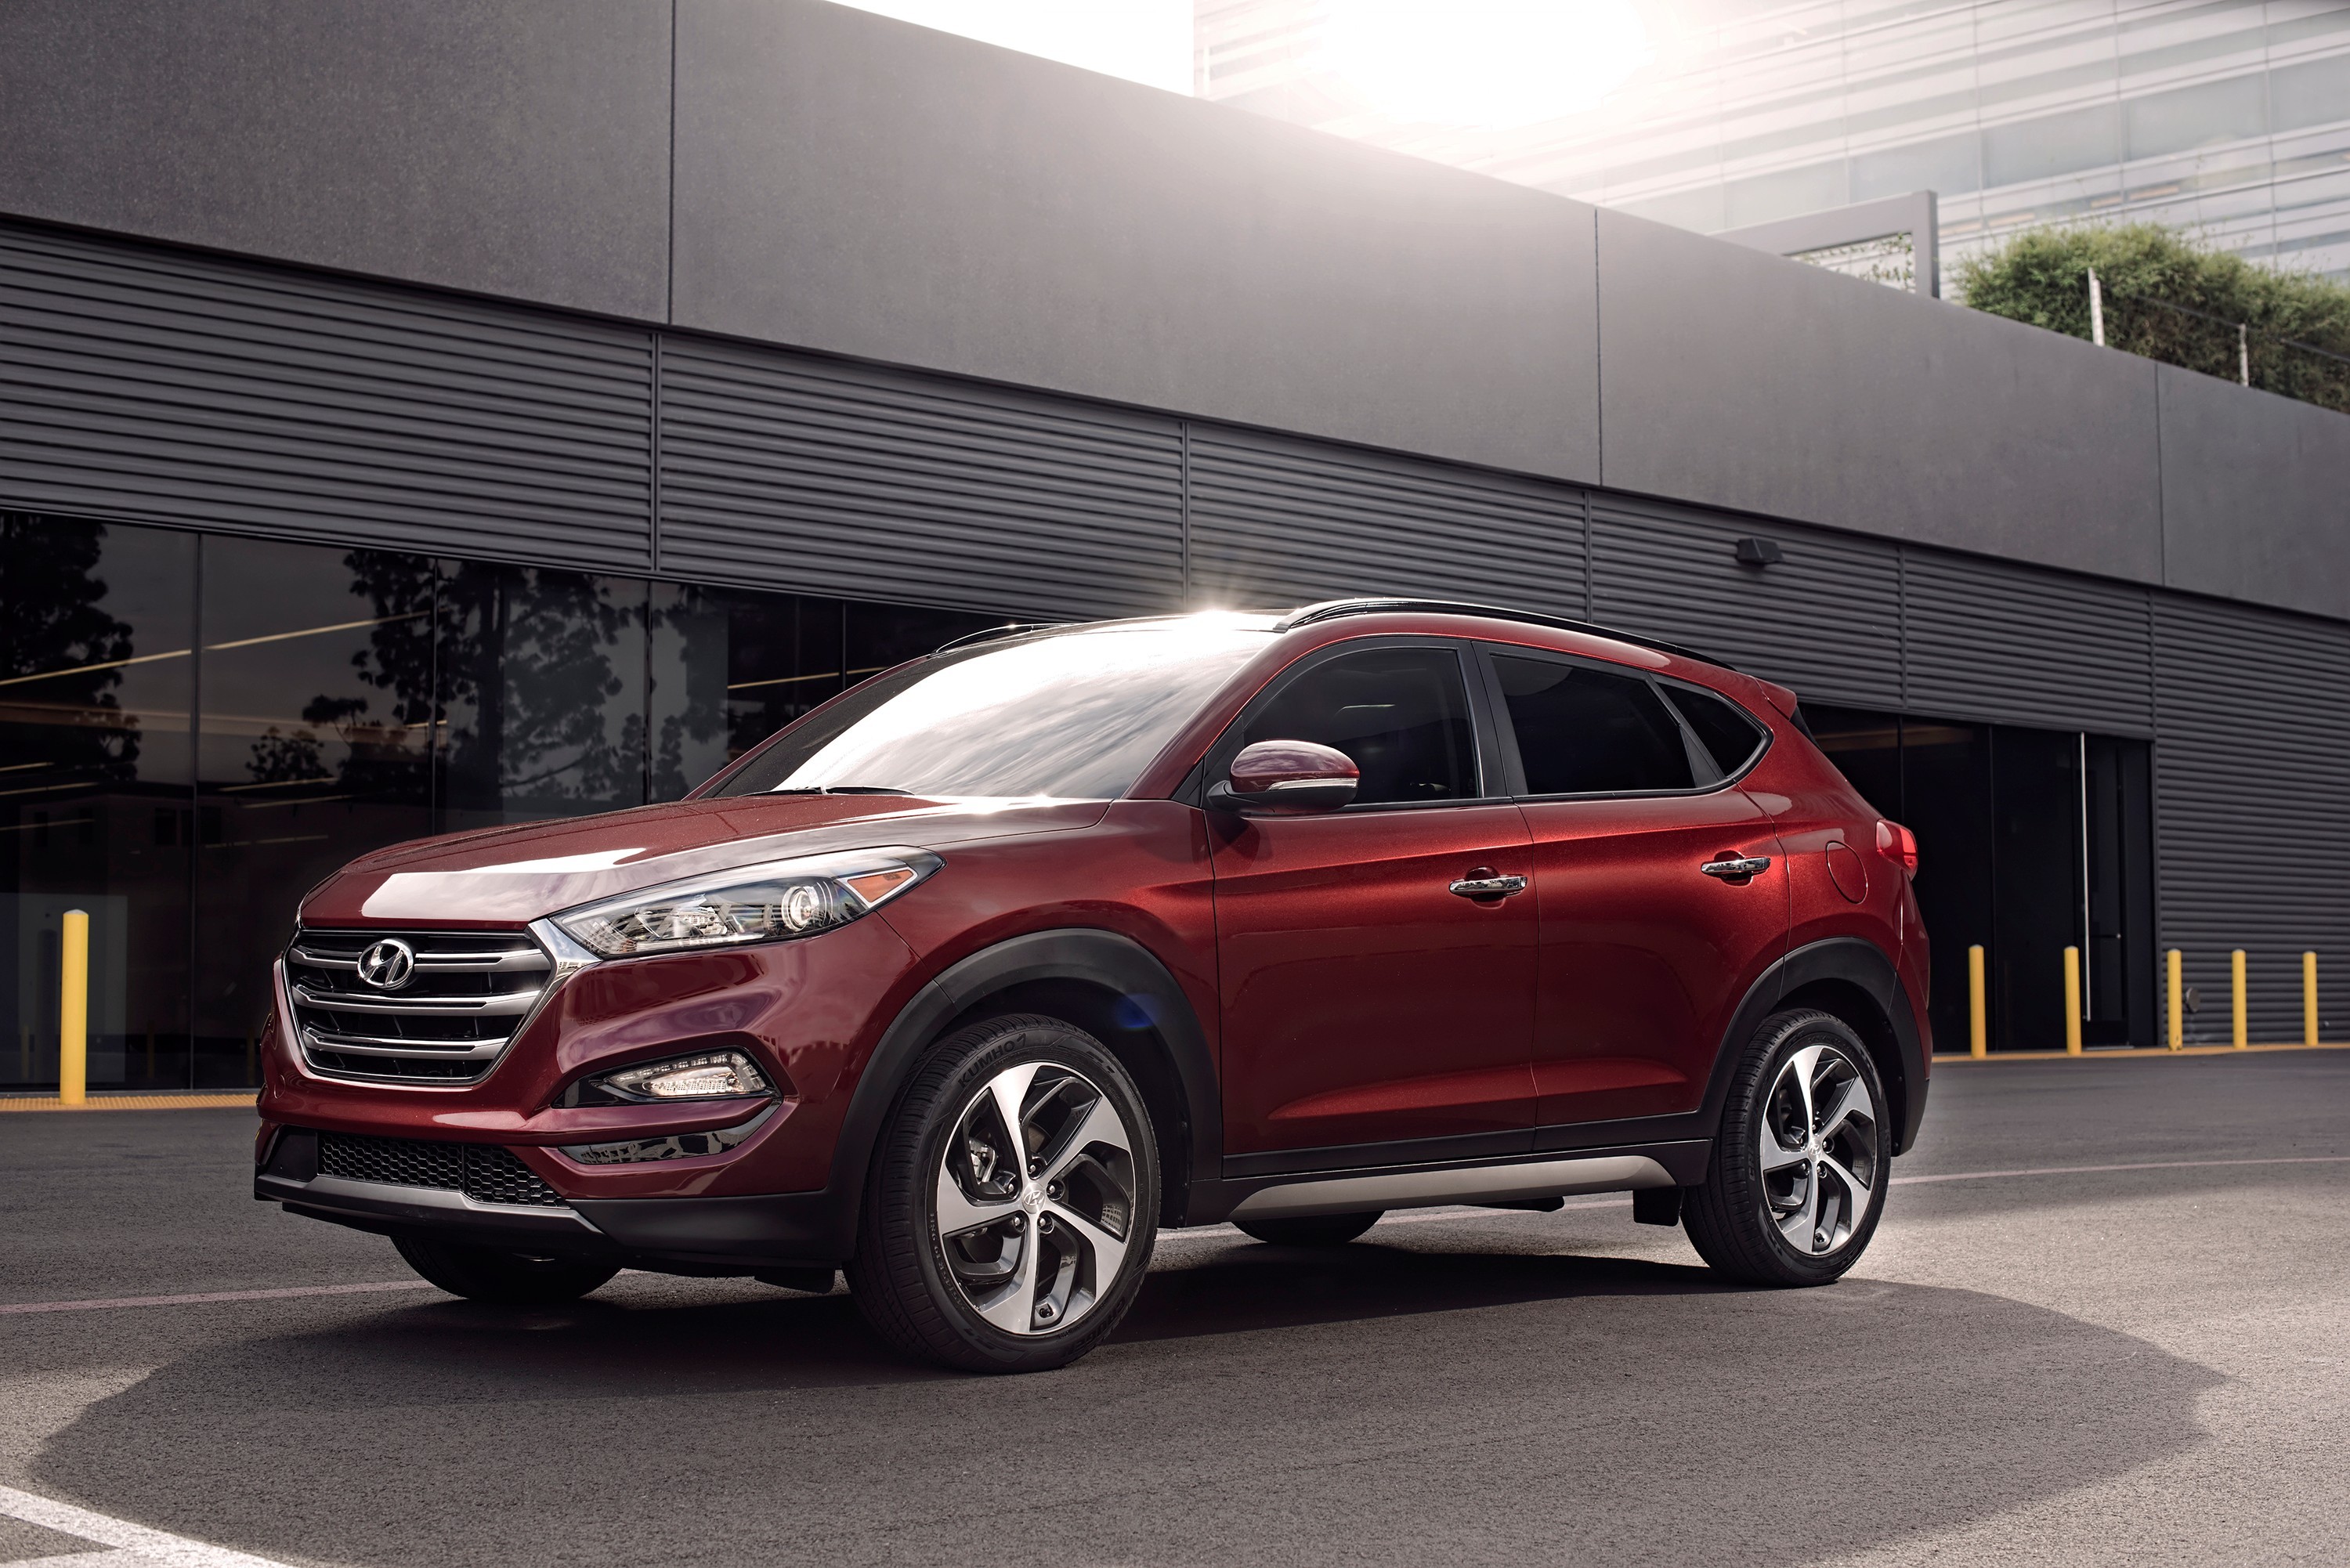 Introducing the 2016 Hyundai Tucson